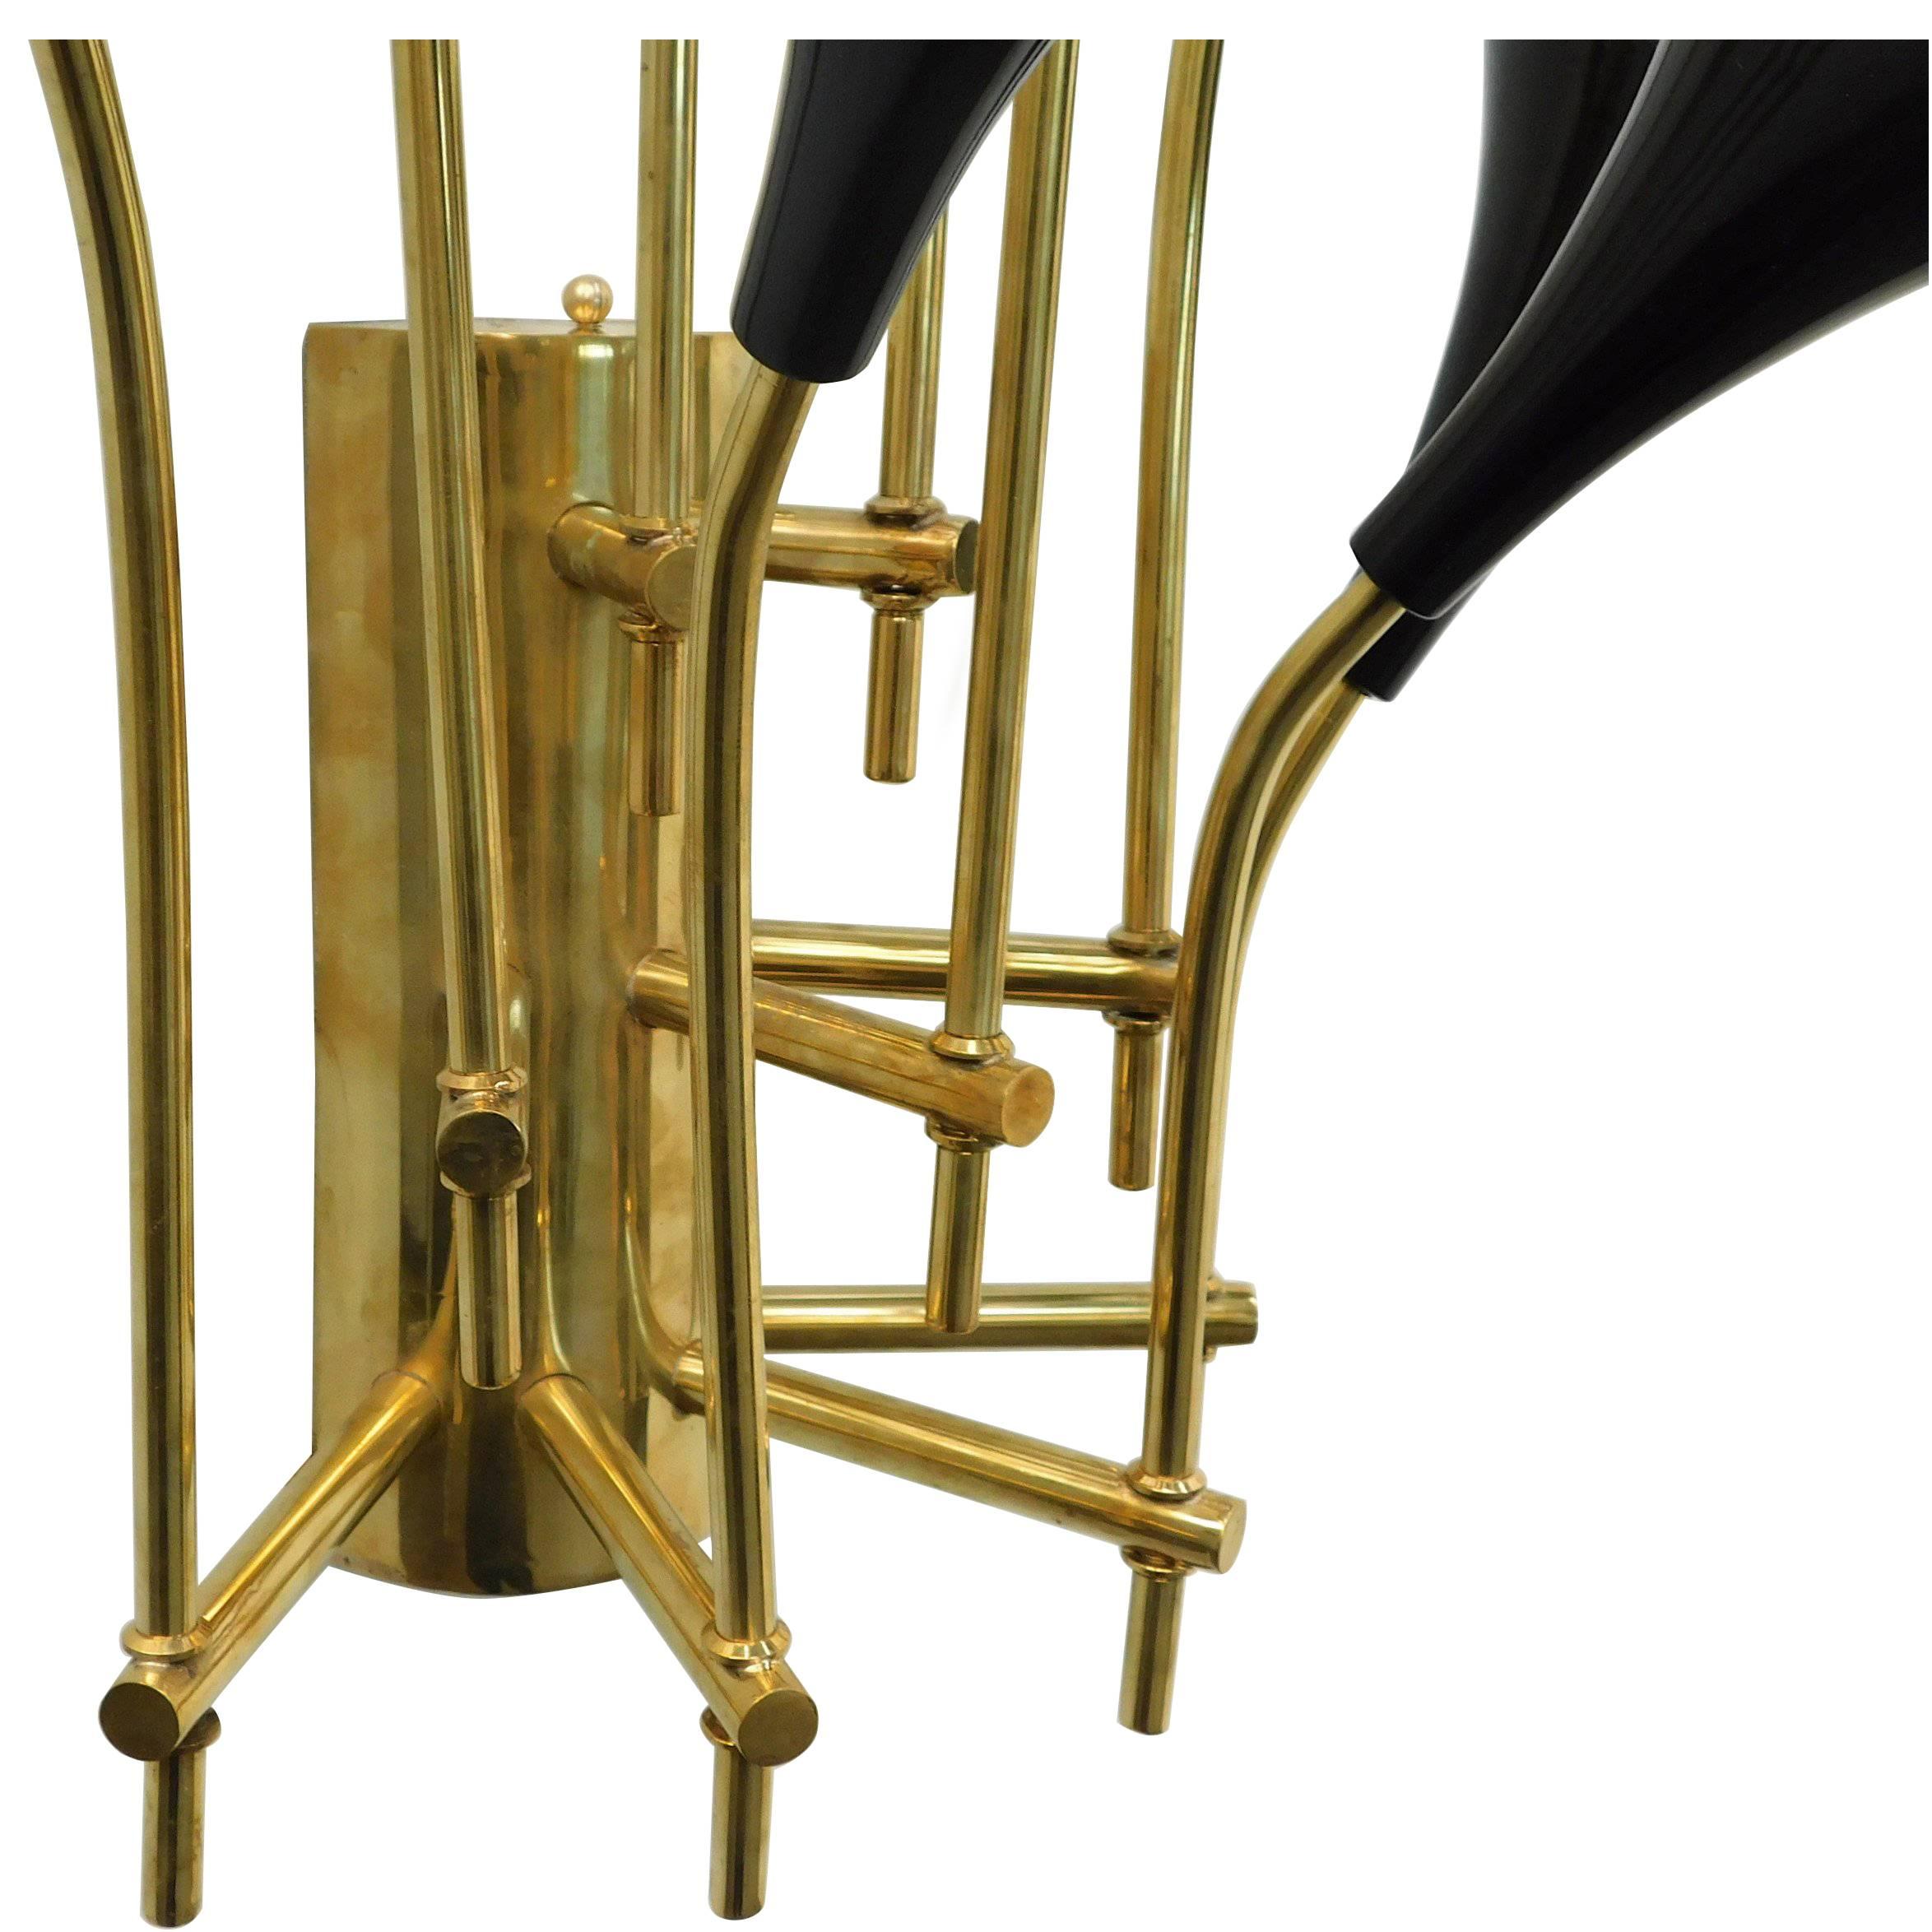 Enameled Pair of Trumpets Sconces by Fabio Ltd